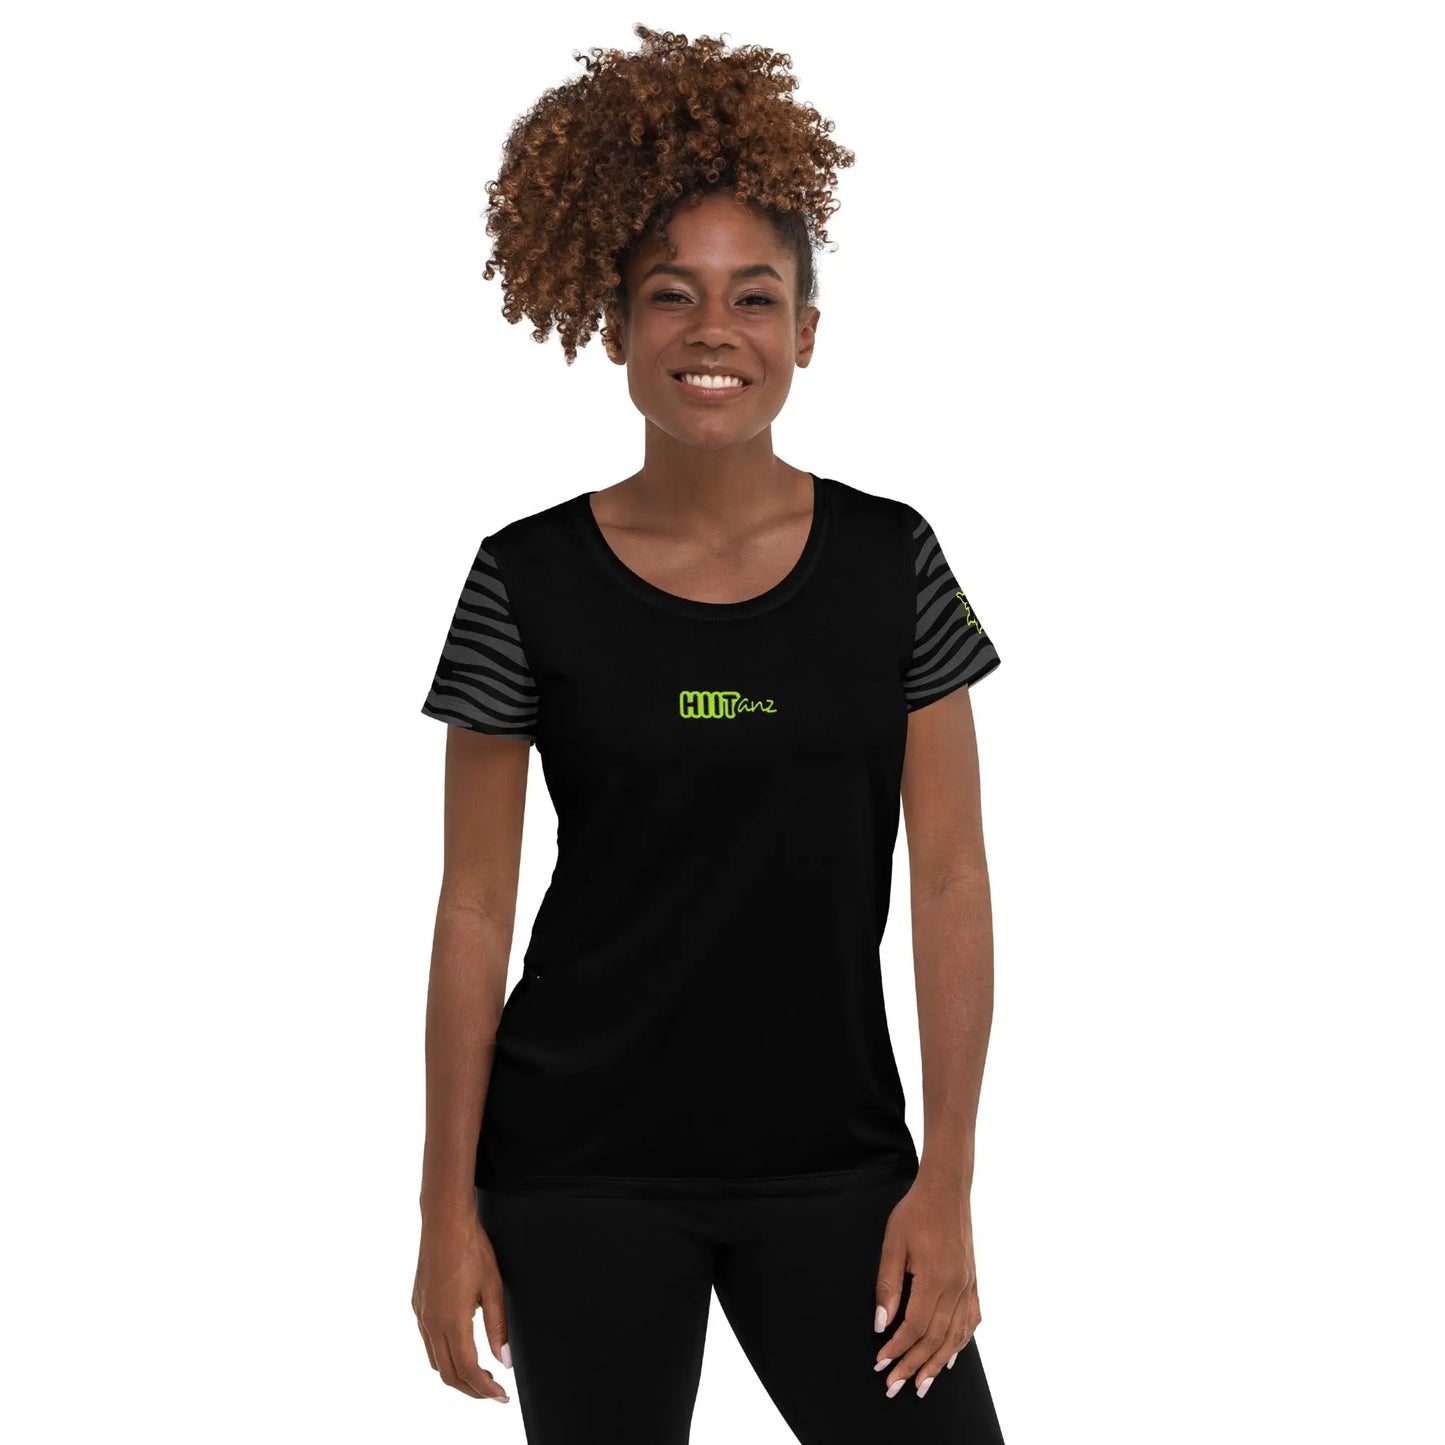 Women's Athletic T-shirt - HIITanz - Image #3